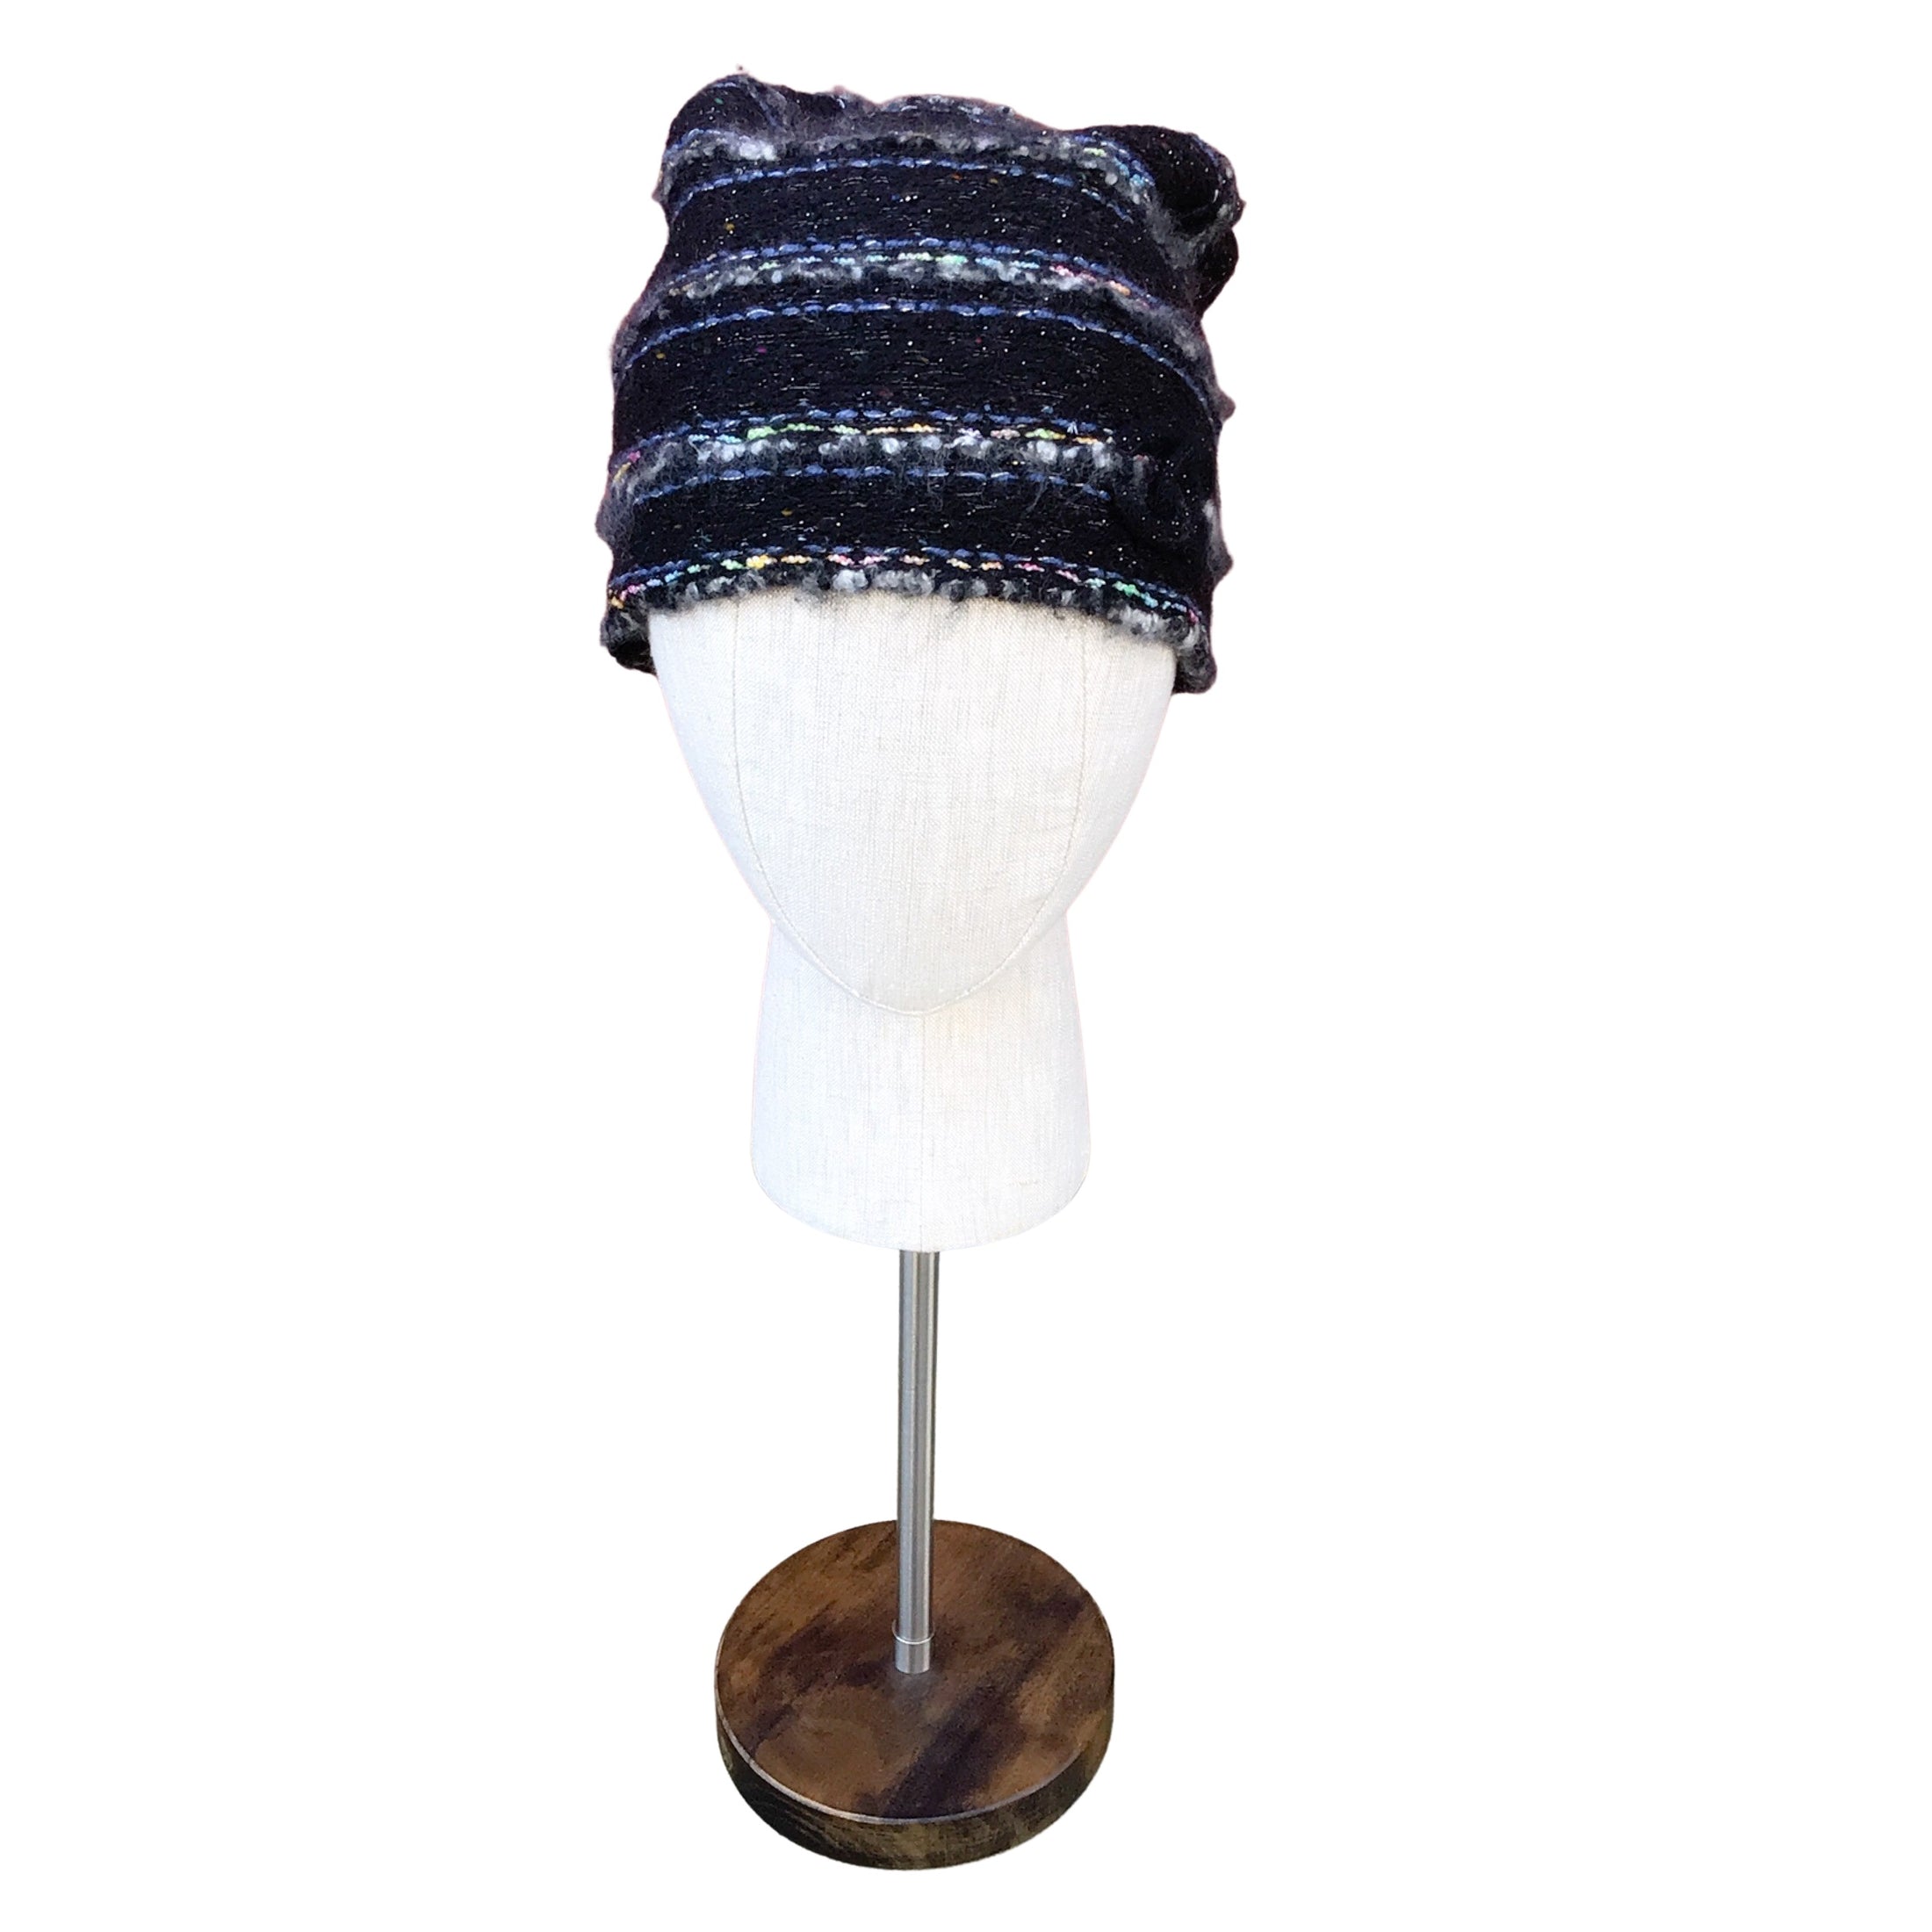 Chanel Black / Blue / Grey Multi Silver Metallic Detail Cc Logo Embroidered Striped Wool Knit Beanie Hat